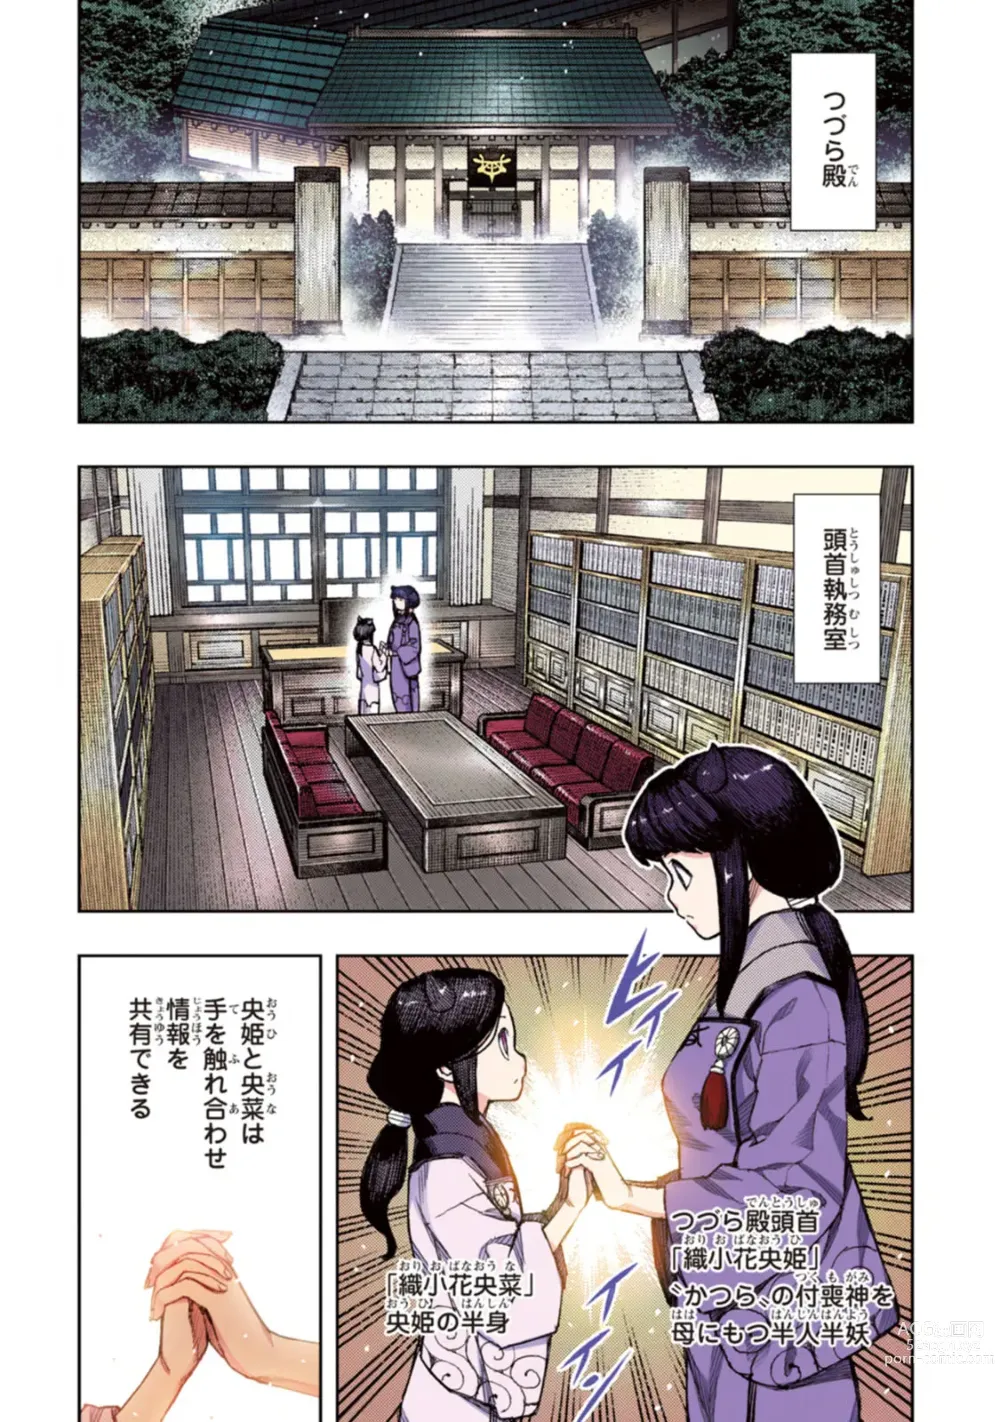 Page 11 of manga Tsugumomo Full Color Kan